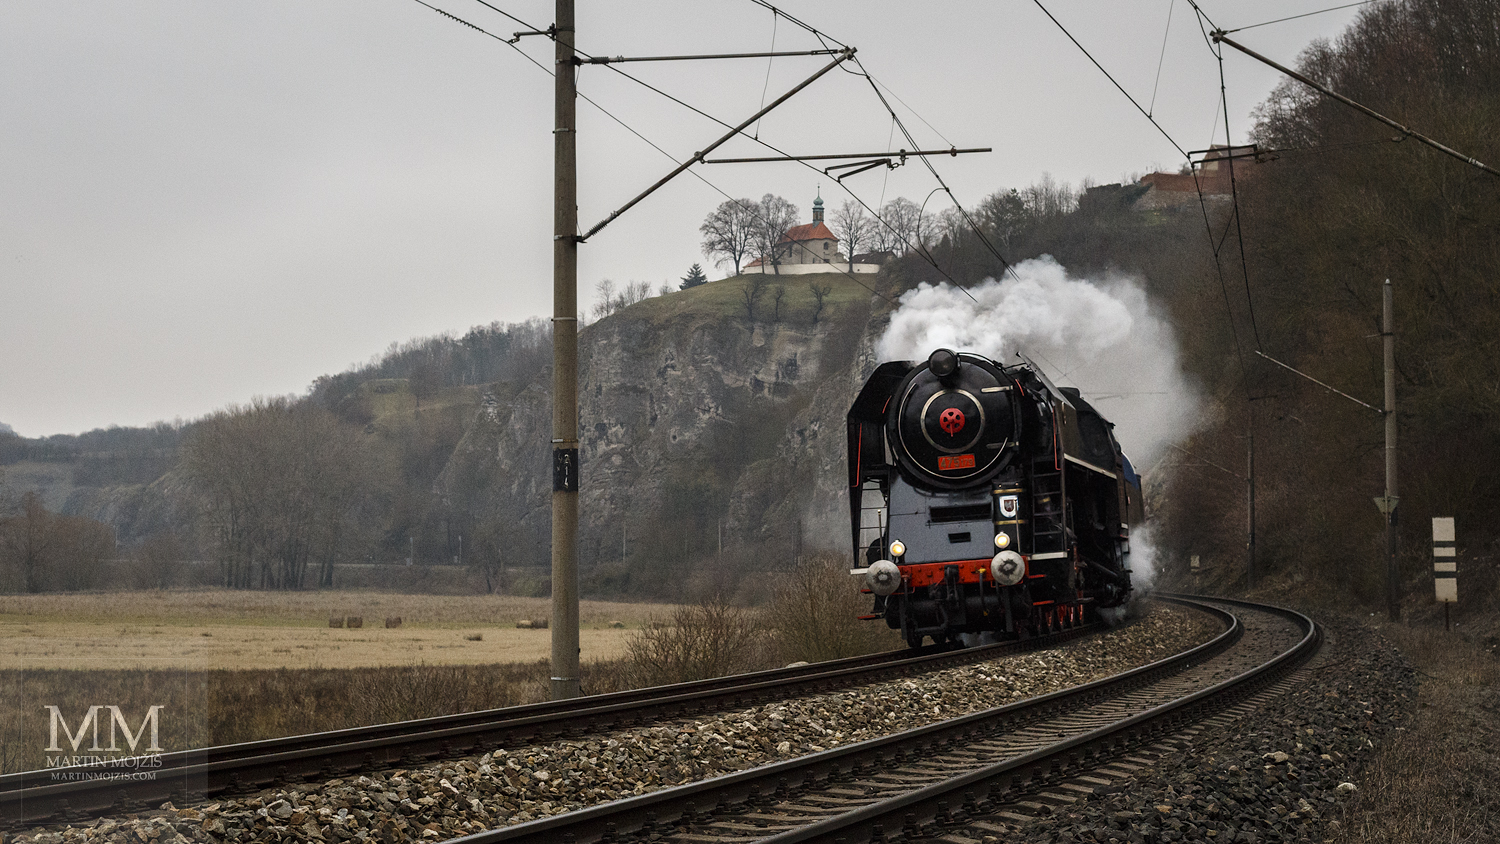 Large format, fine art photograph of the steam locomotive. Martin Mojzis.